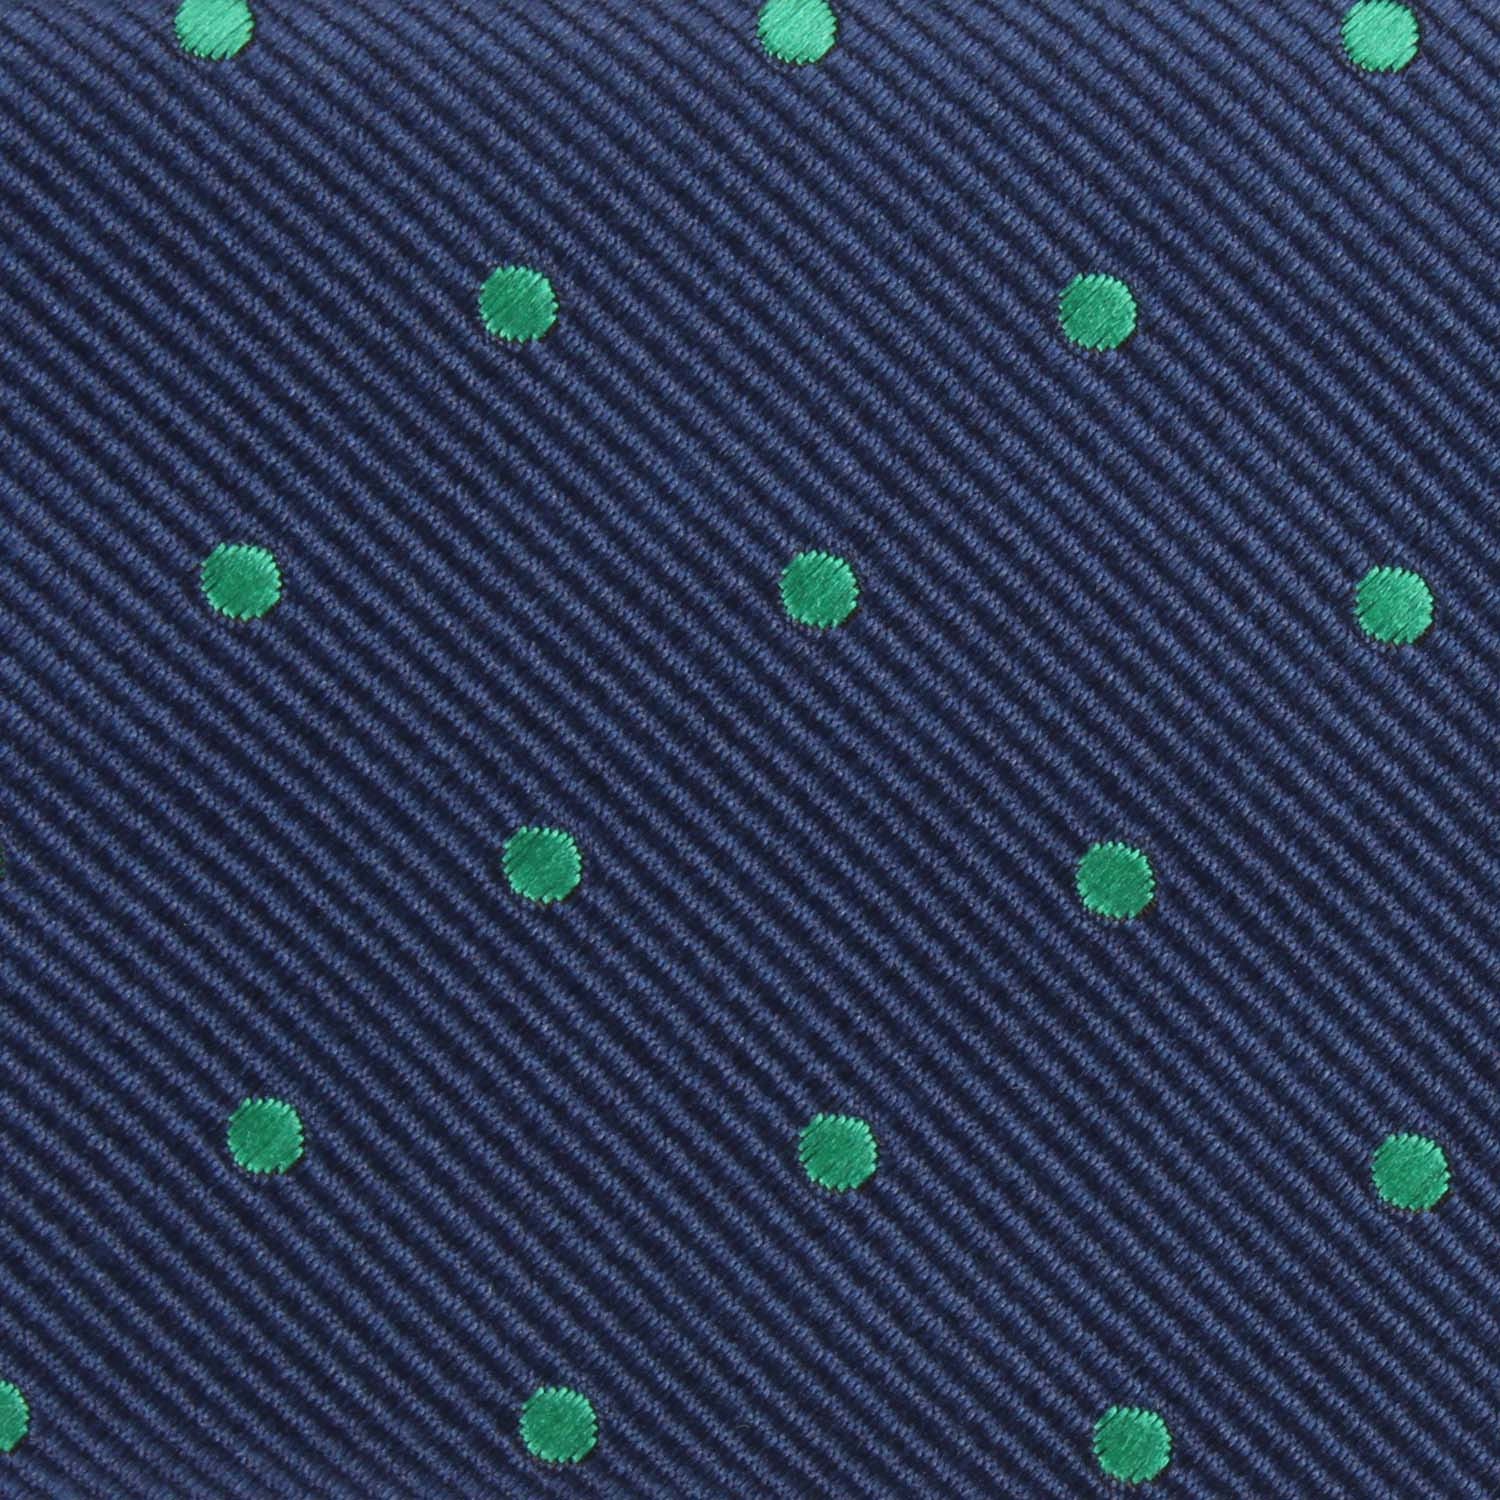 Navy Blue with Green Polka Dots Fabric Self Tie Diamond Tip Bow TieM130